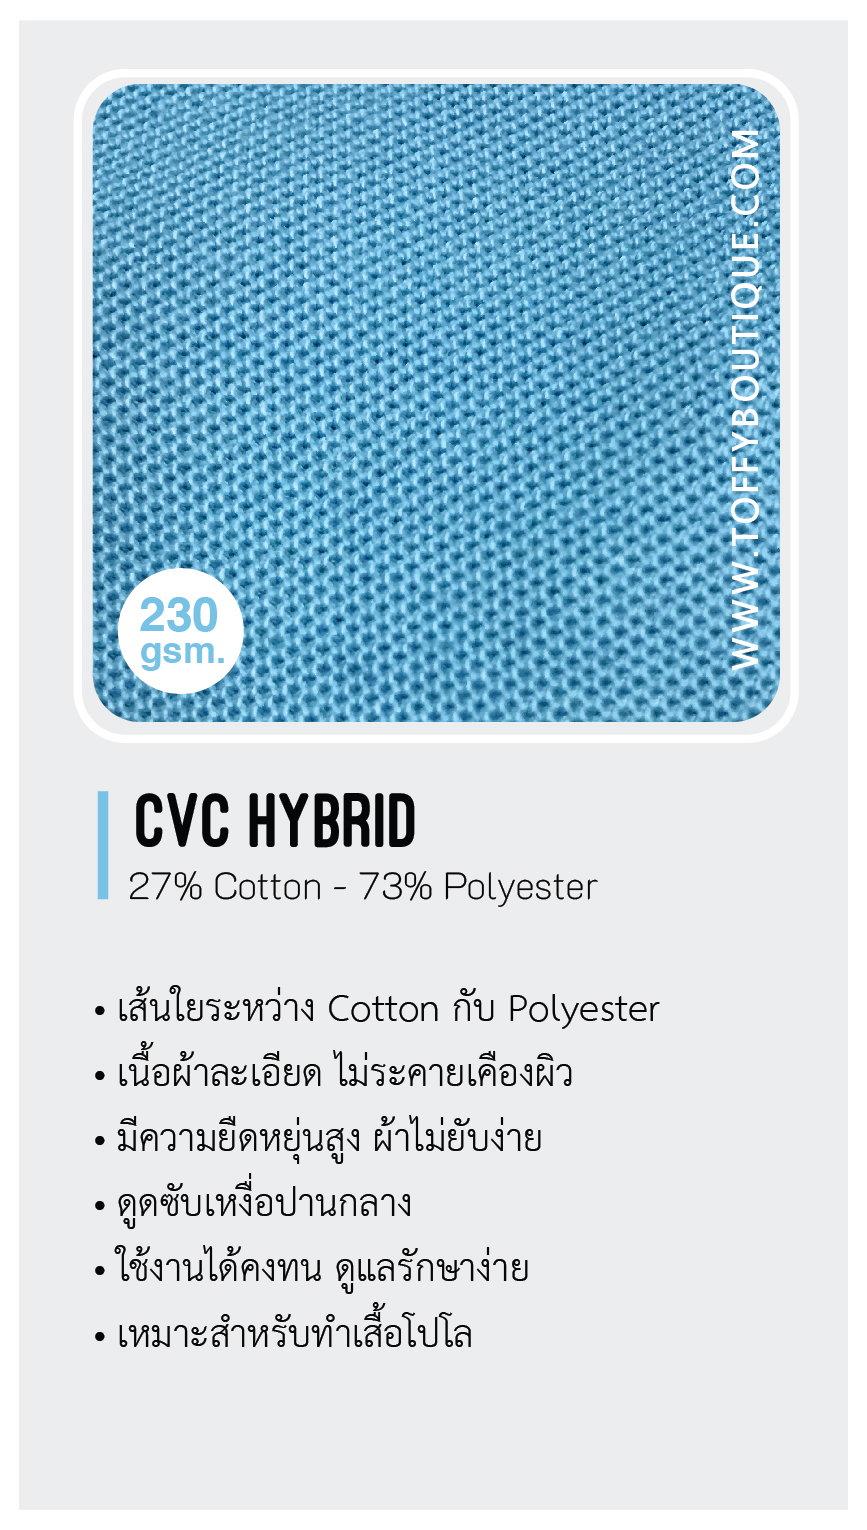 cvc hybrid